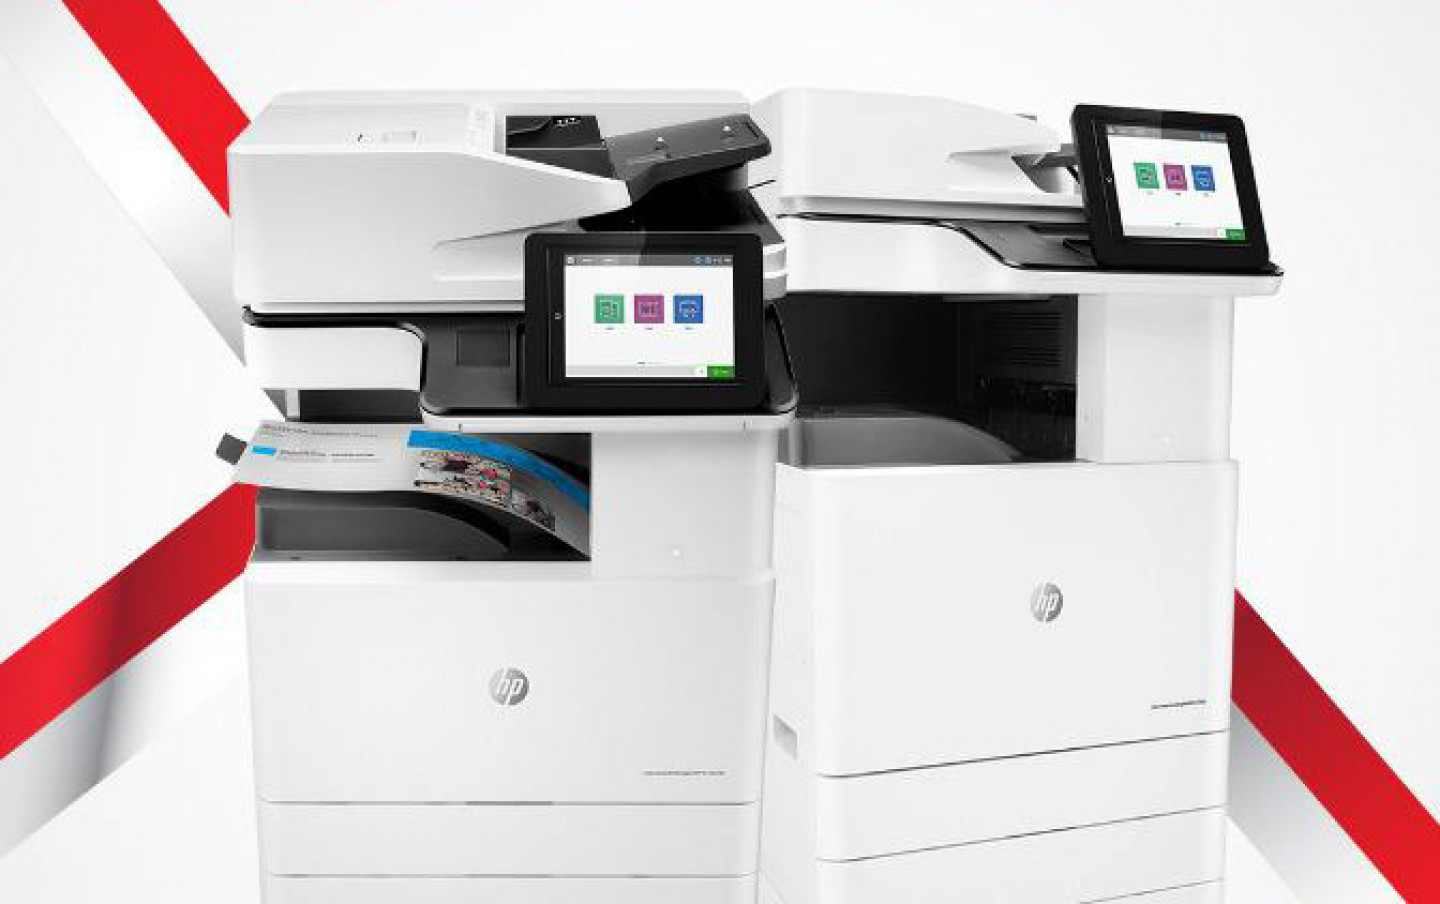 HP Printer August - September Promotion